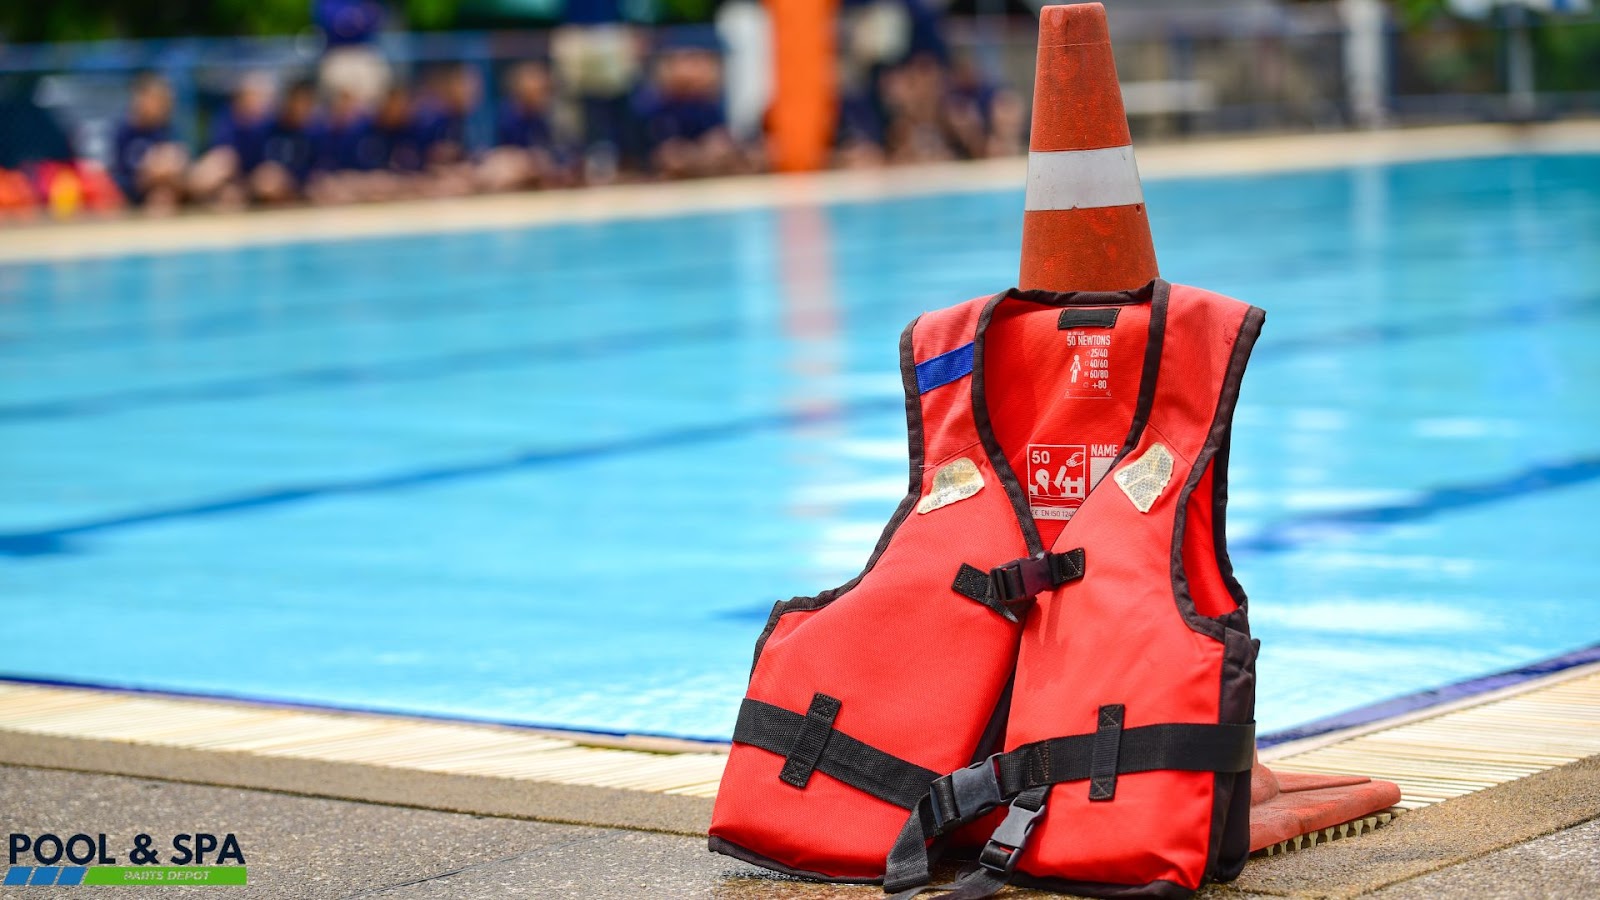 Pool Safety Checks